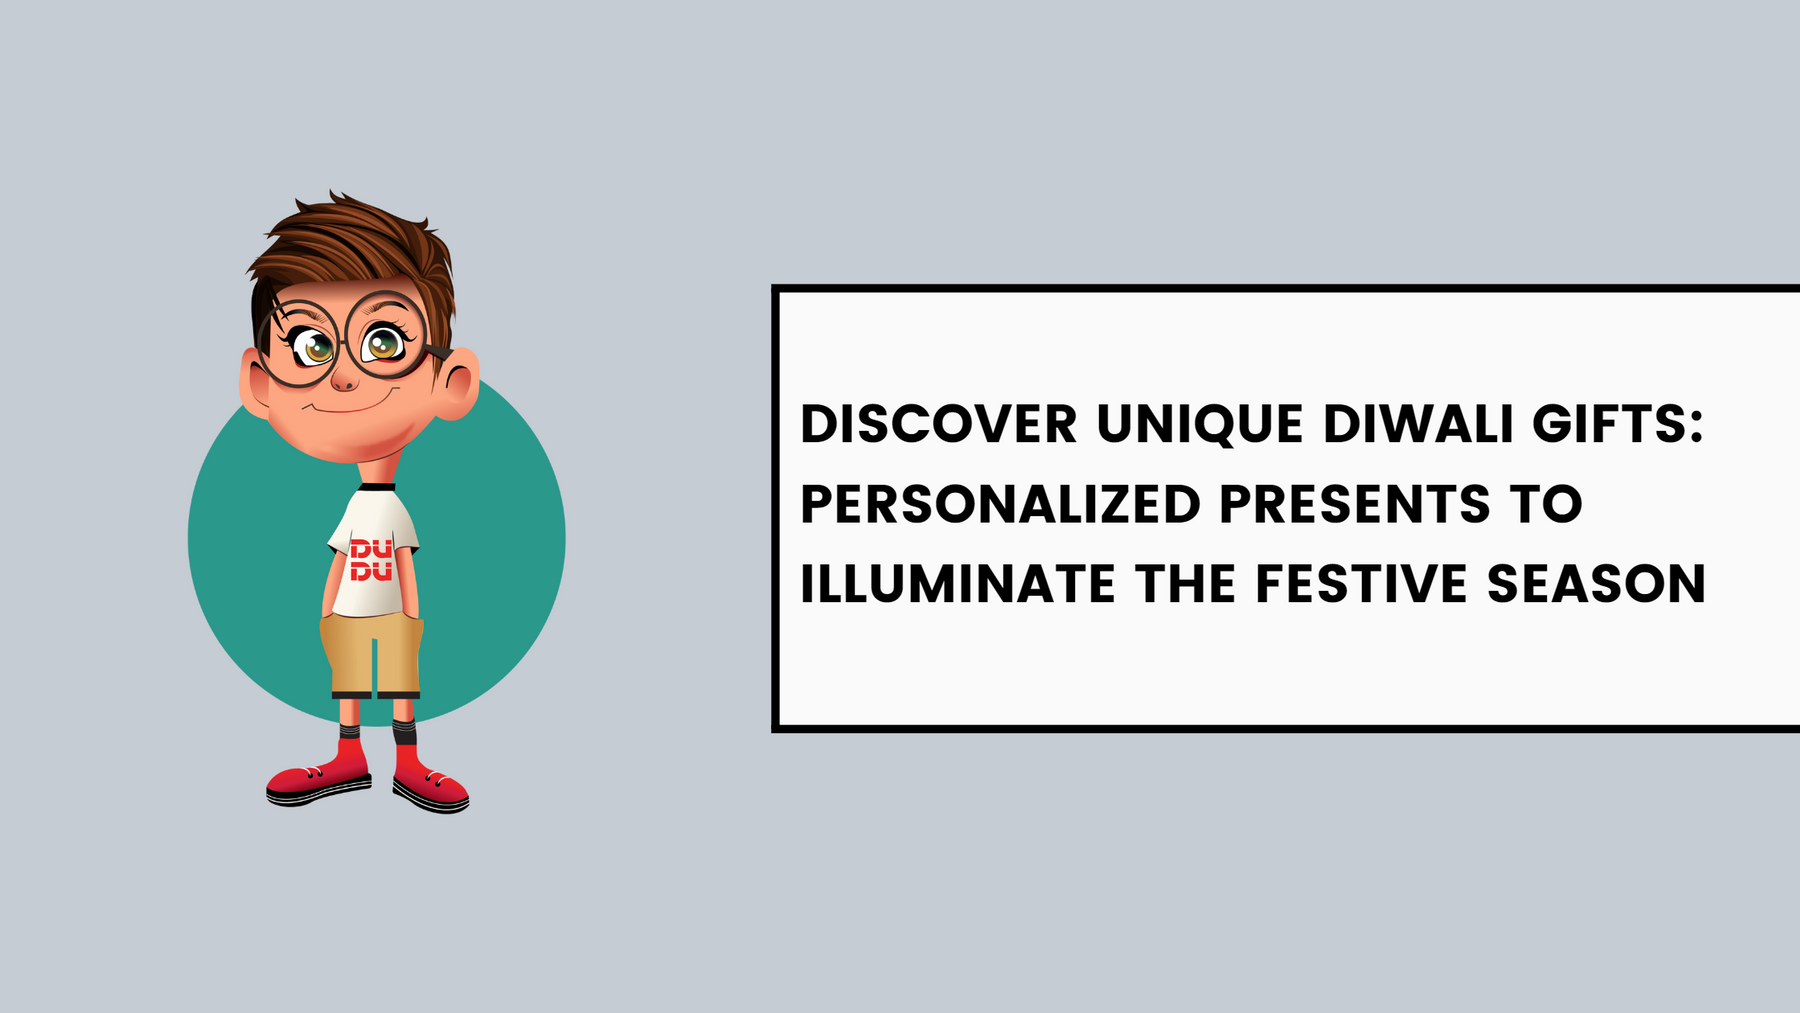 Discover Unique Diwali Gifts: Personalized Presents to Illuminate the Festive Season